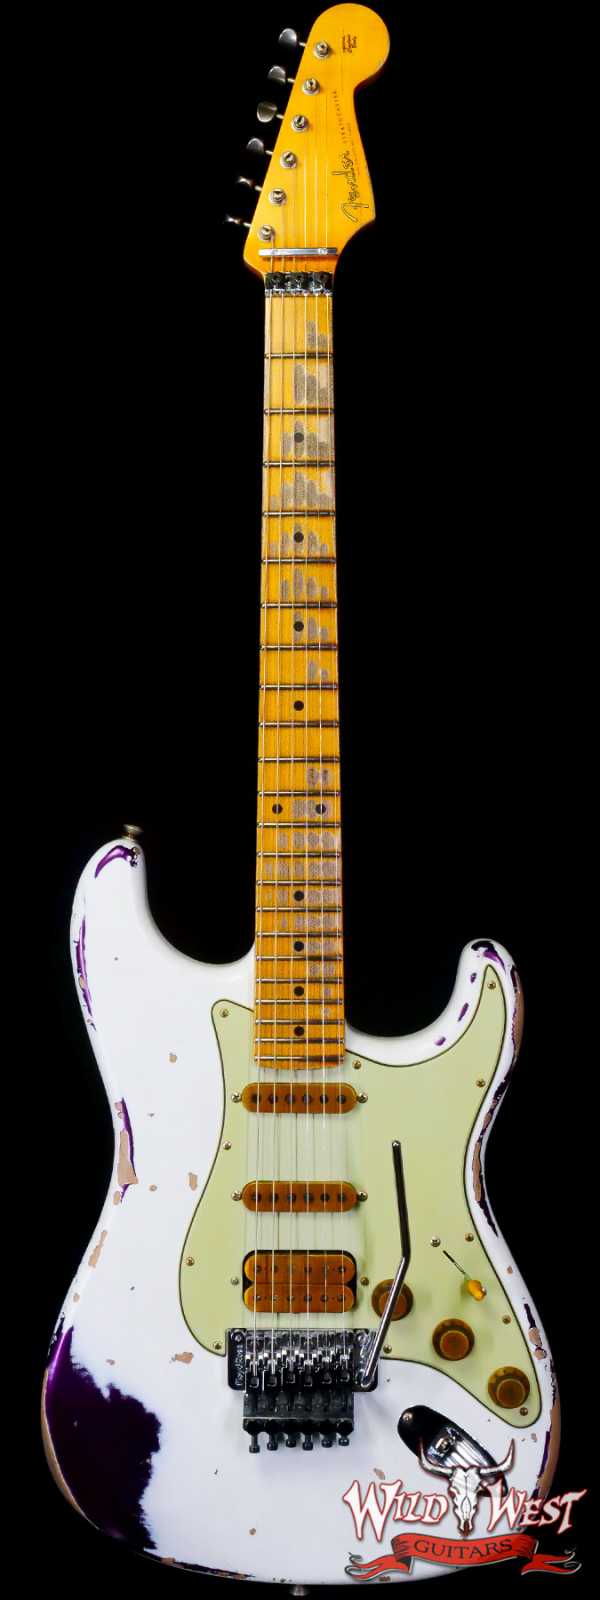 Fender Custom Shop Wild West White Lightning Stratocaster HSS Floyd Rose Maple Board 22 Frets Heavy Relic Purple Metallic